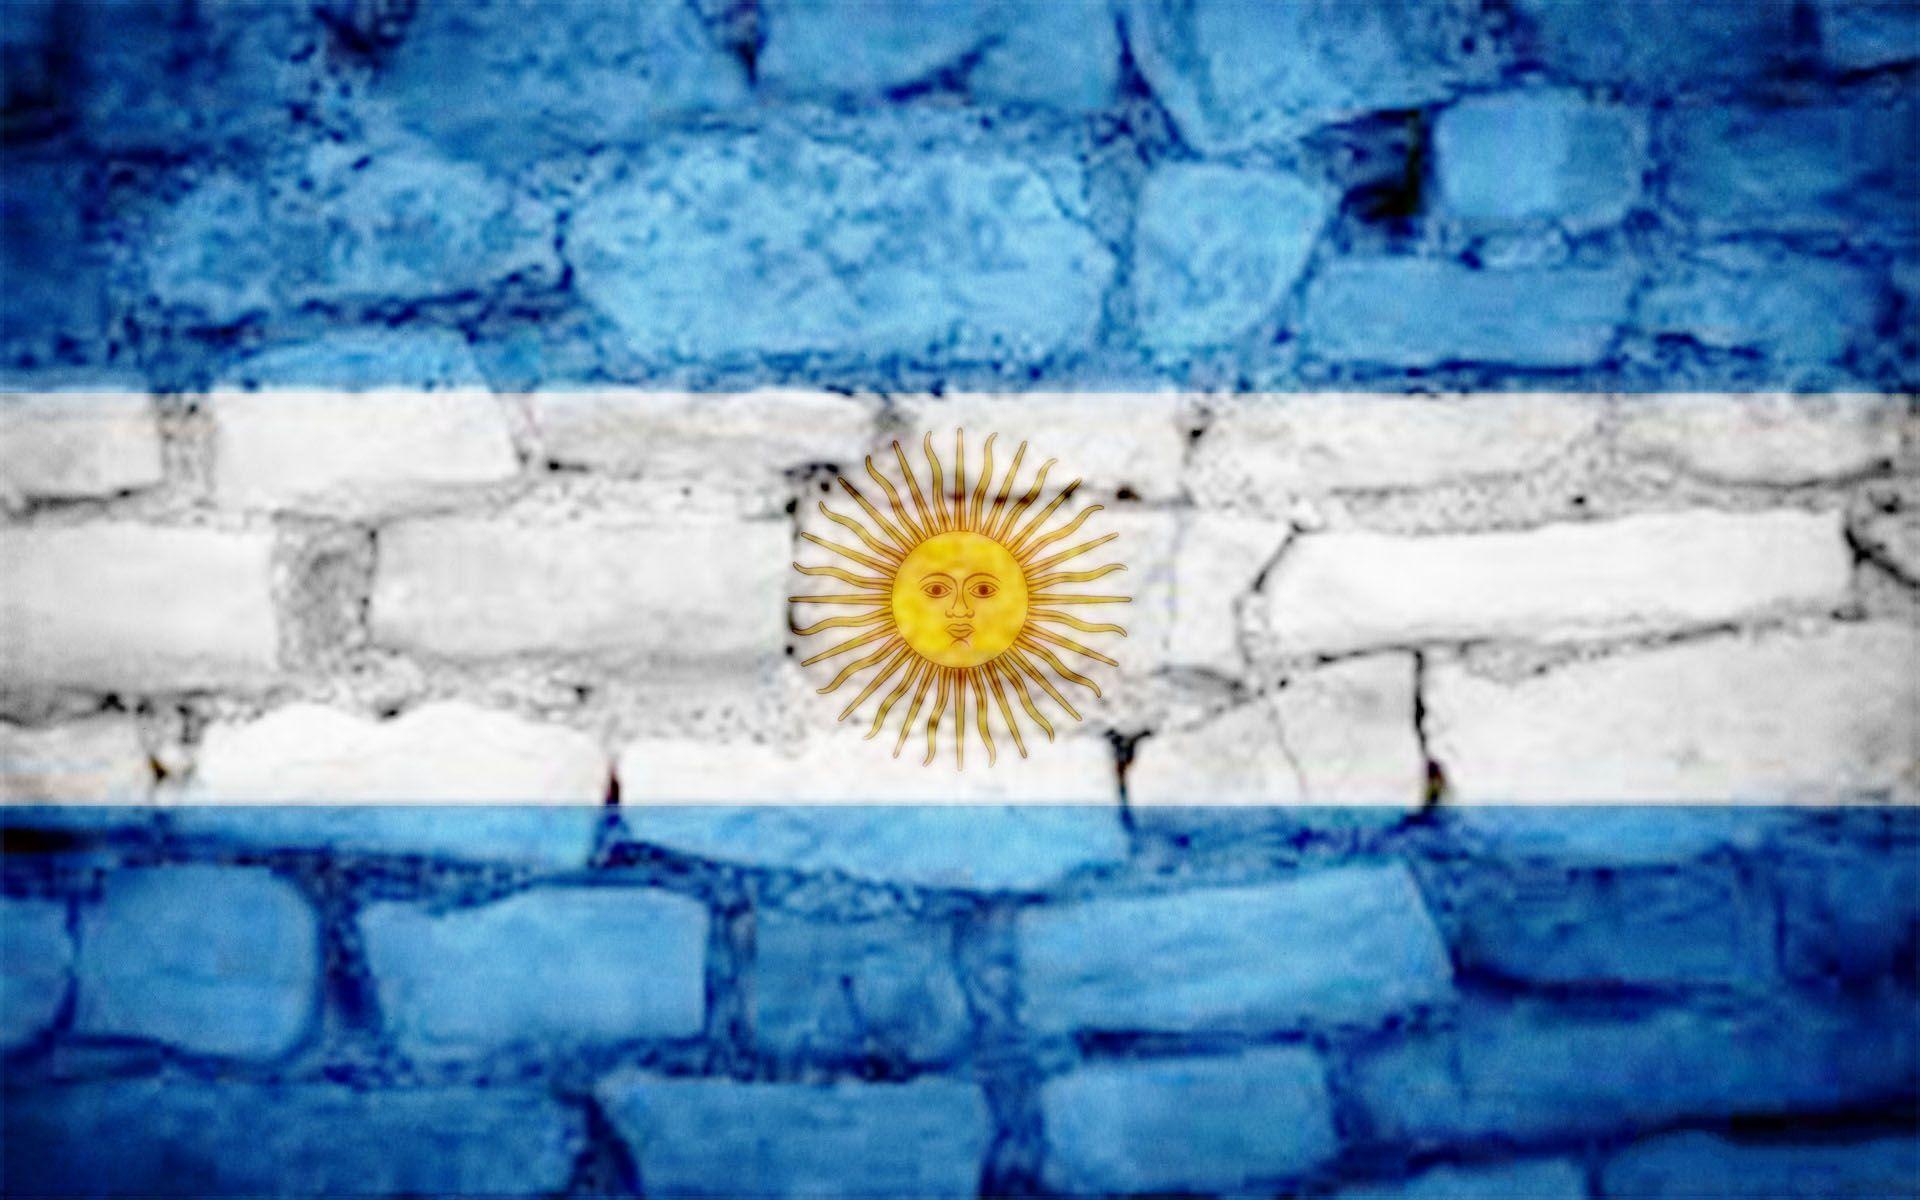 Argentina Flag Desktop Wallpaper